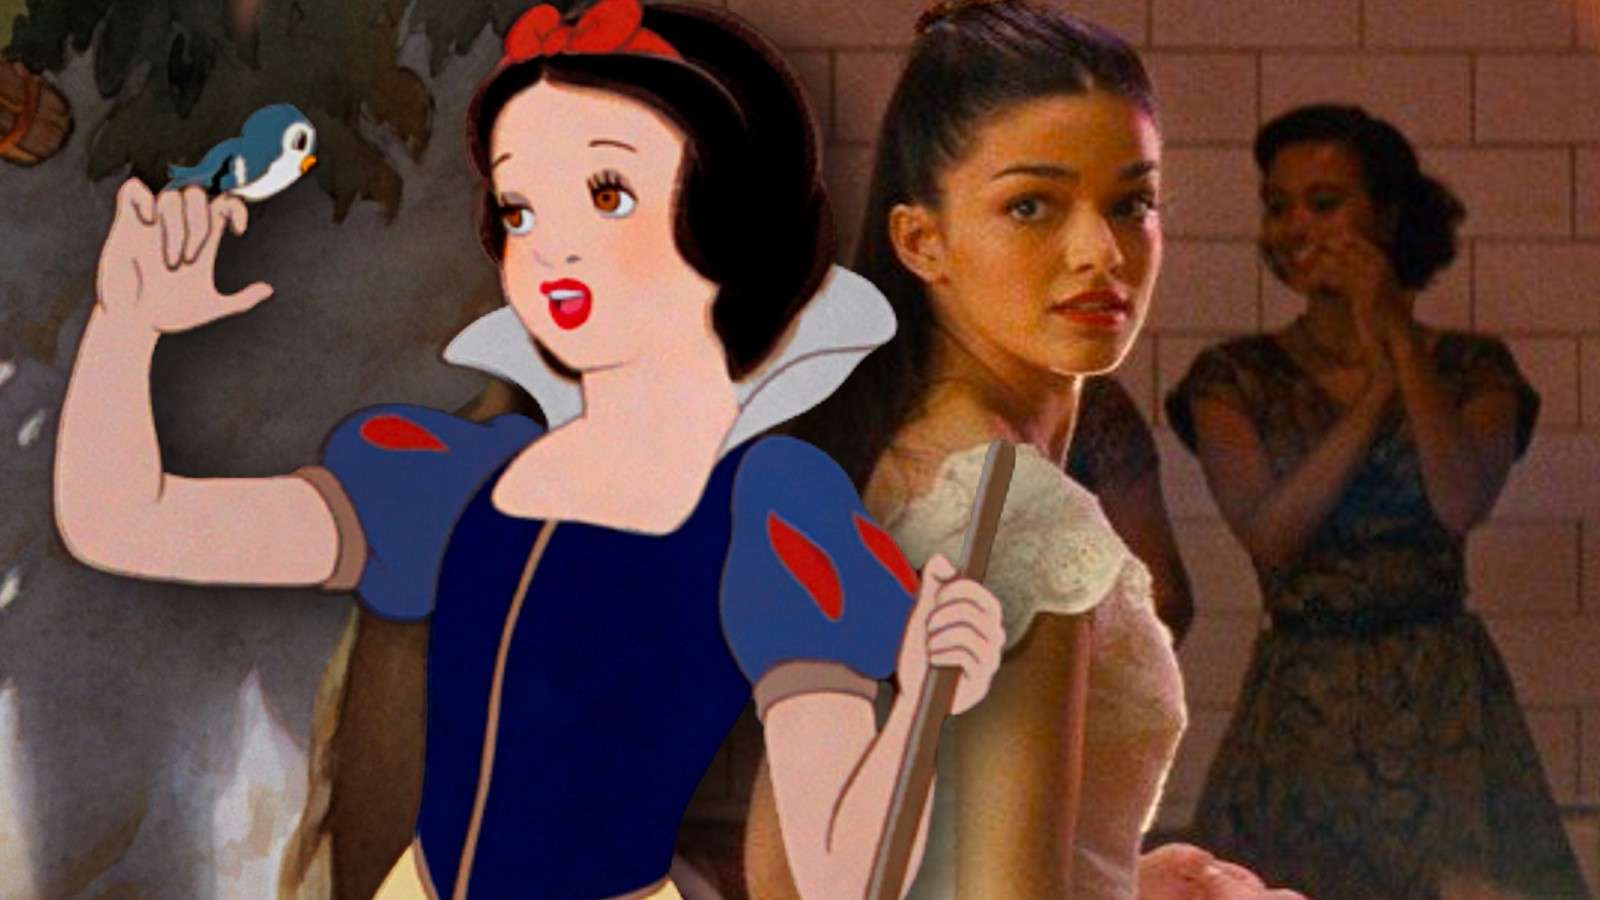 Disney Snow White Rachel Zegler Images Said To Be Fake; Update